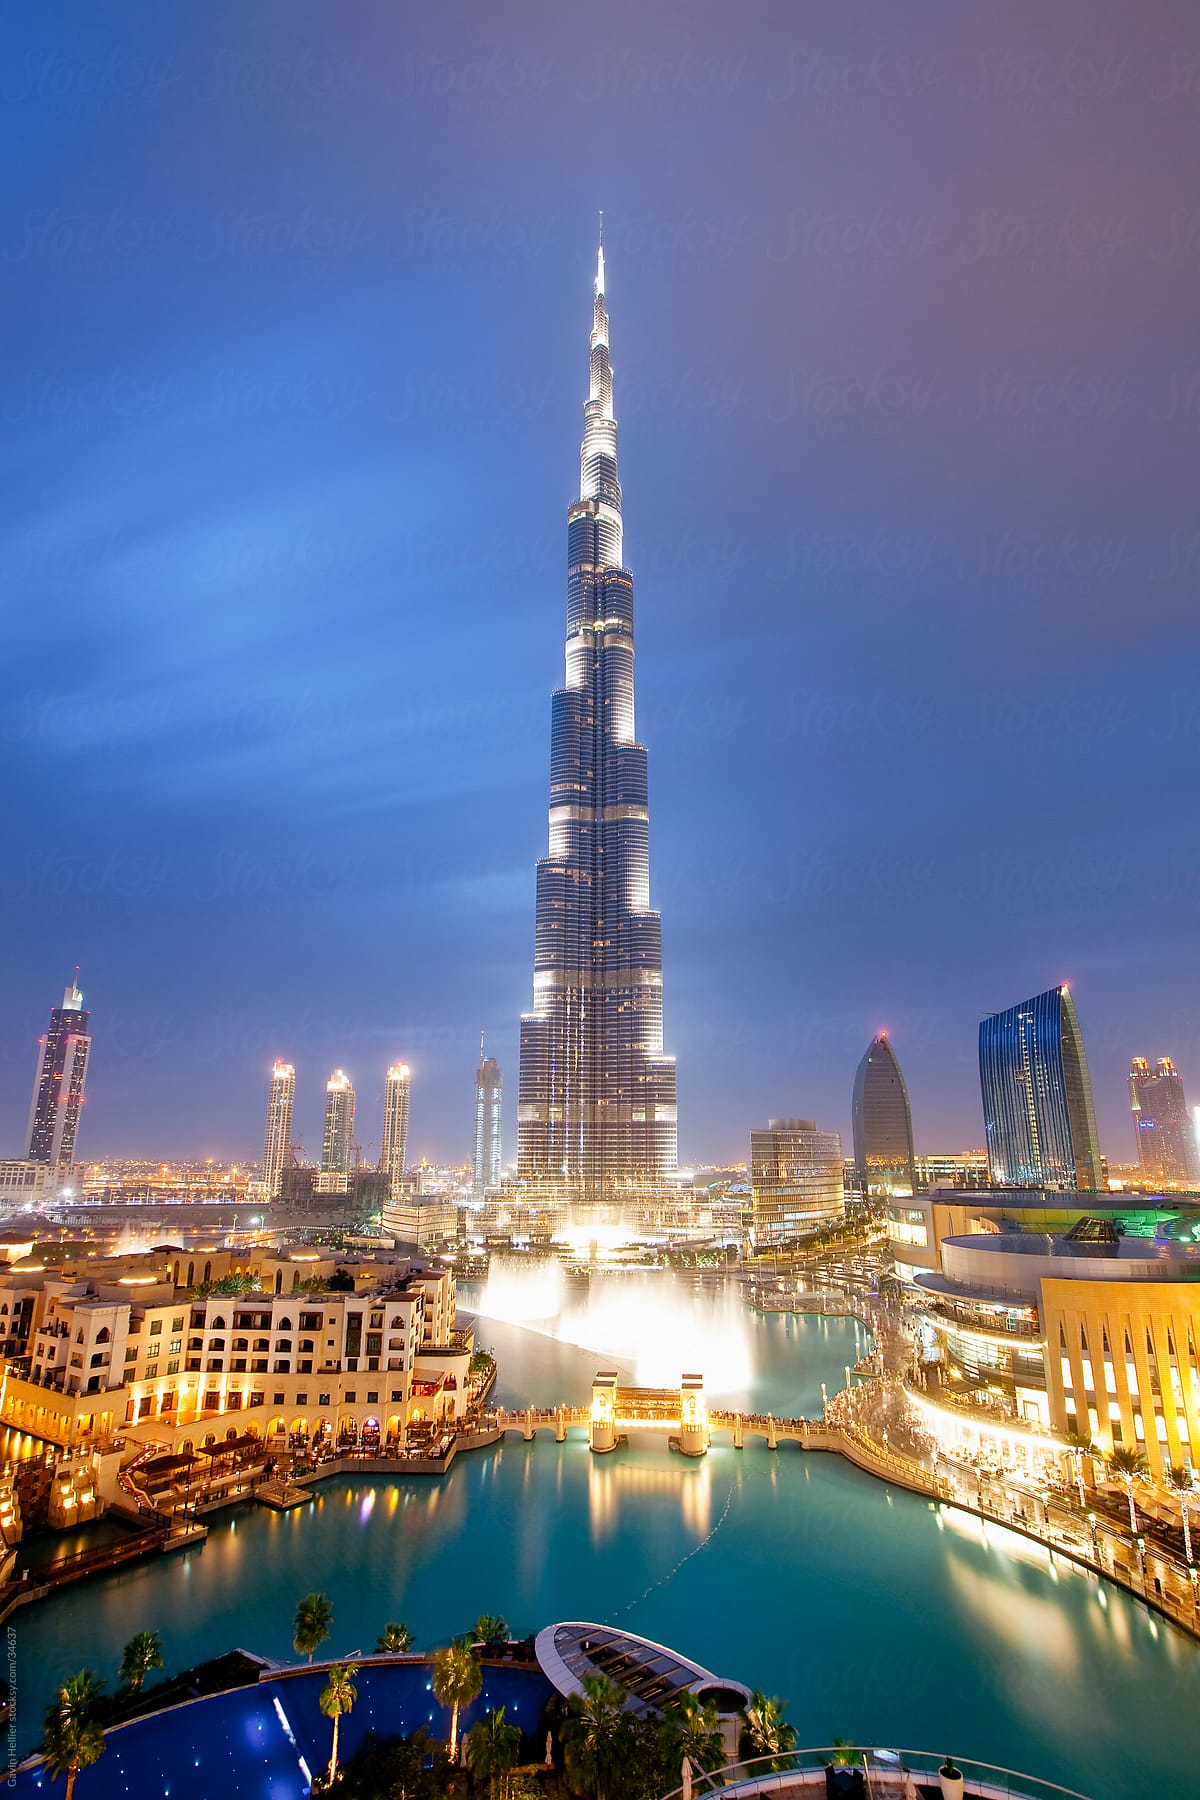 Burj Khalifa, the tallest man made structure in the world at 828 metres, Downtown Dubai, Dubai, United Arab Emirates, Middle East